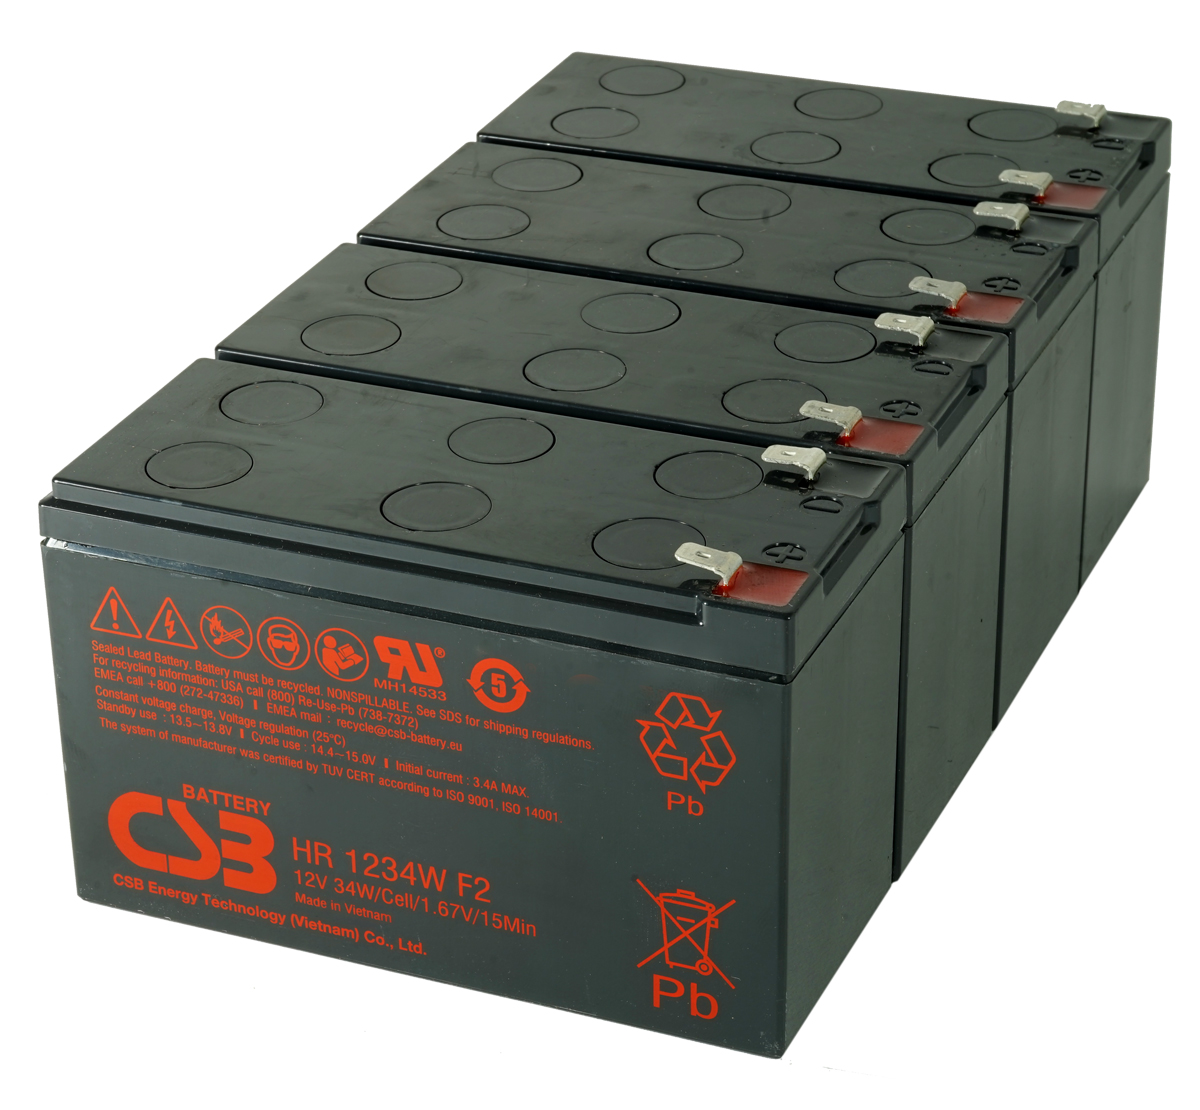 MDS68768 UPS Battery Kit for MGE / Eaton UPS